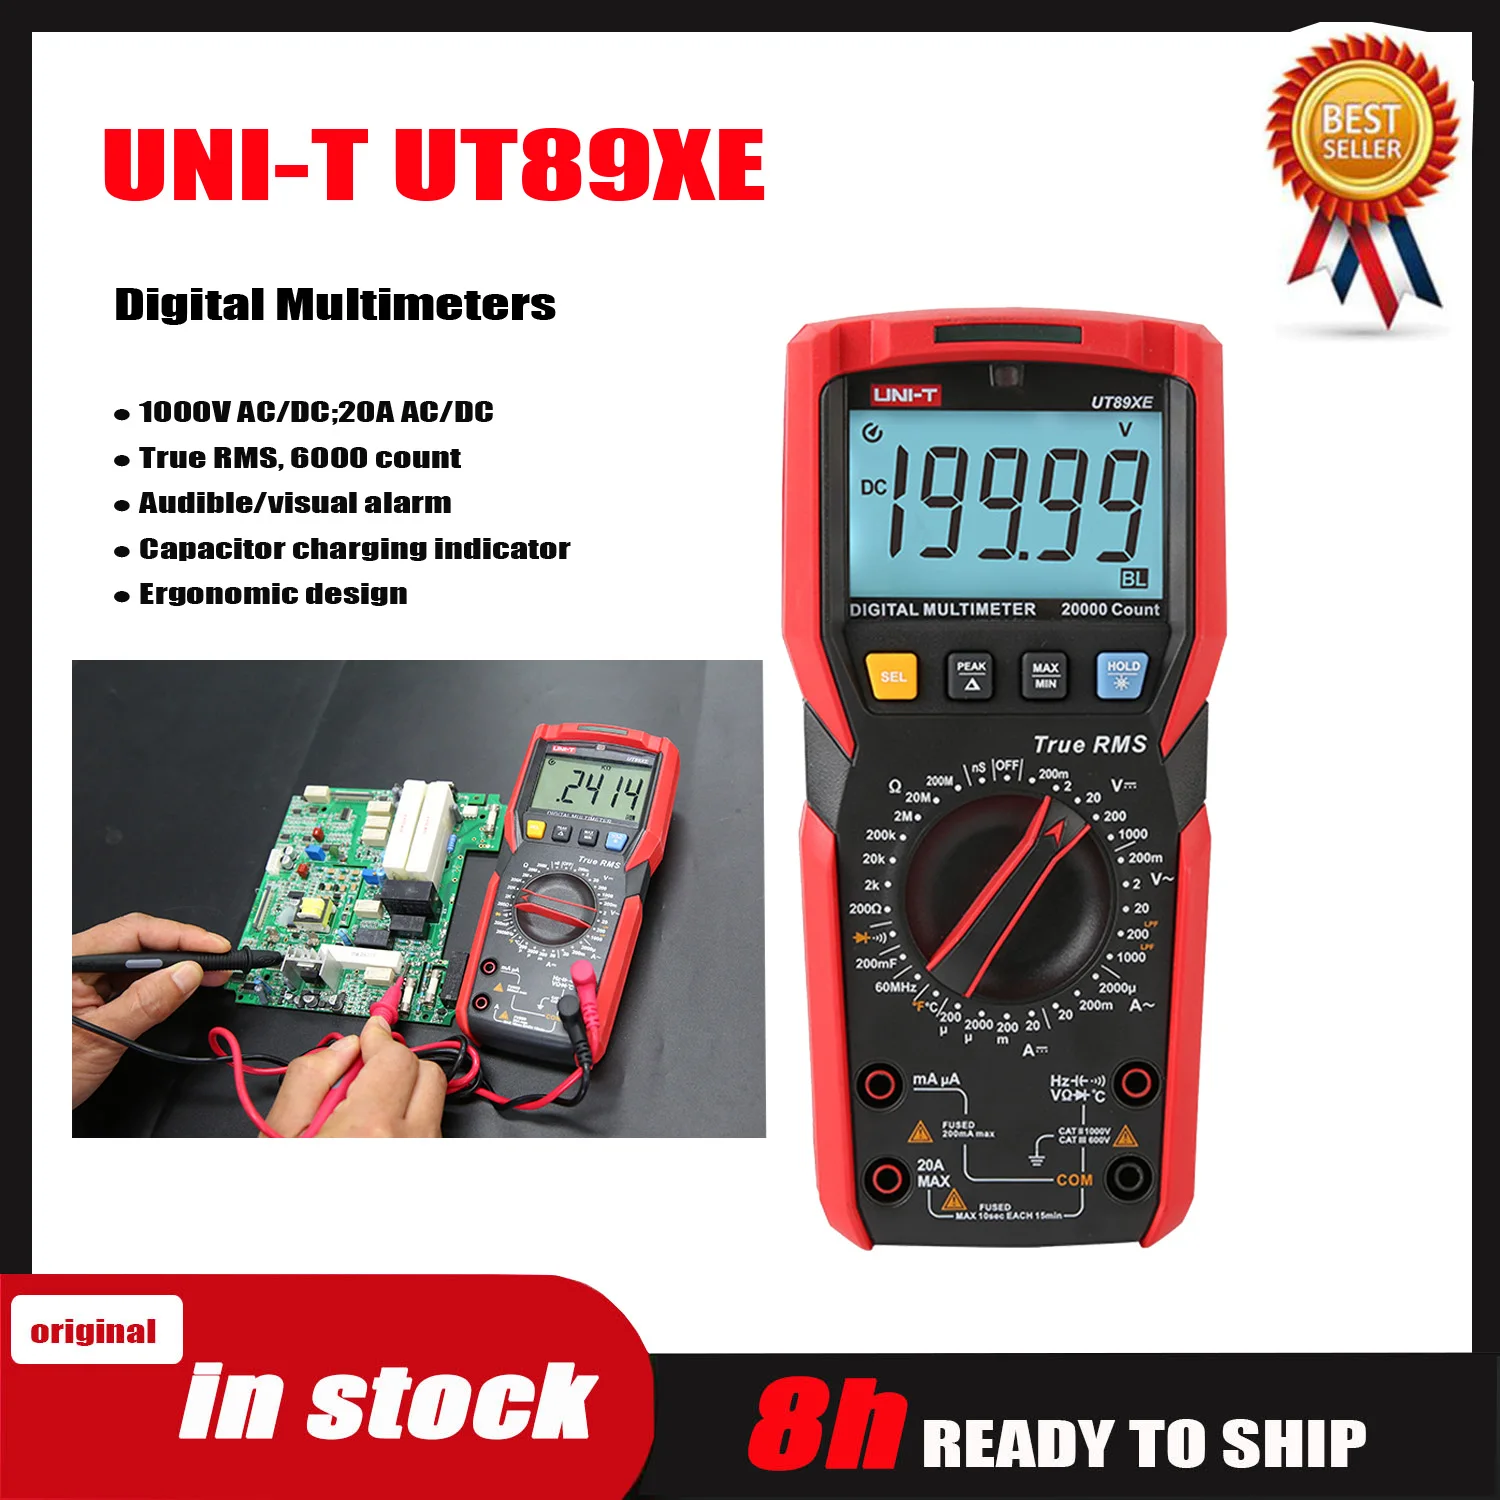 

UNI-T UT89XE Digital Multimeter Professional Tester True RMS Manual Range DC AC Voltmeter Ammeter Capacitor Temperature Meter.